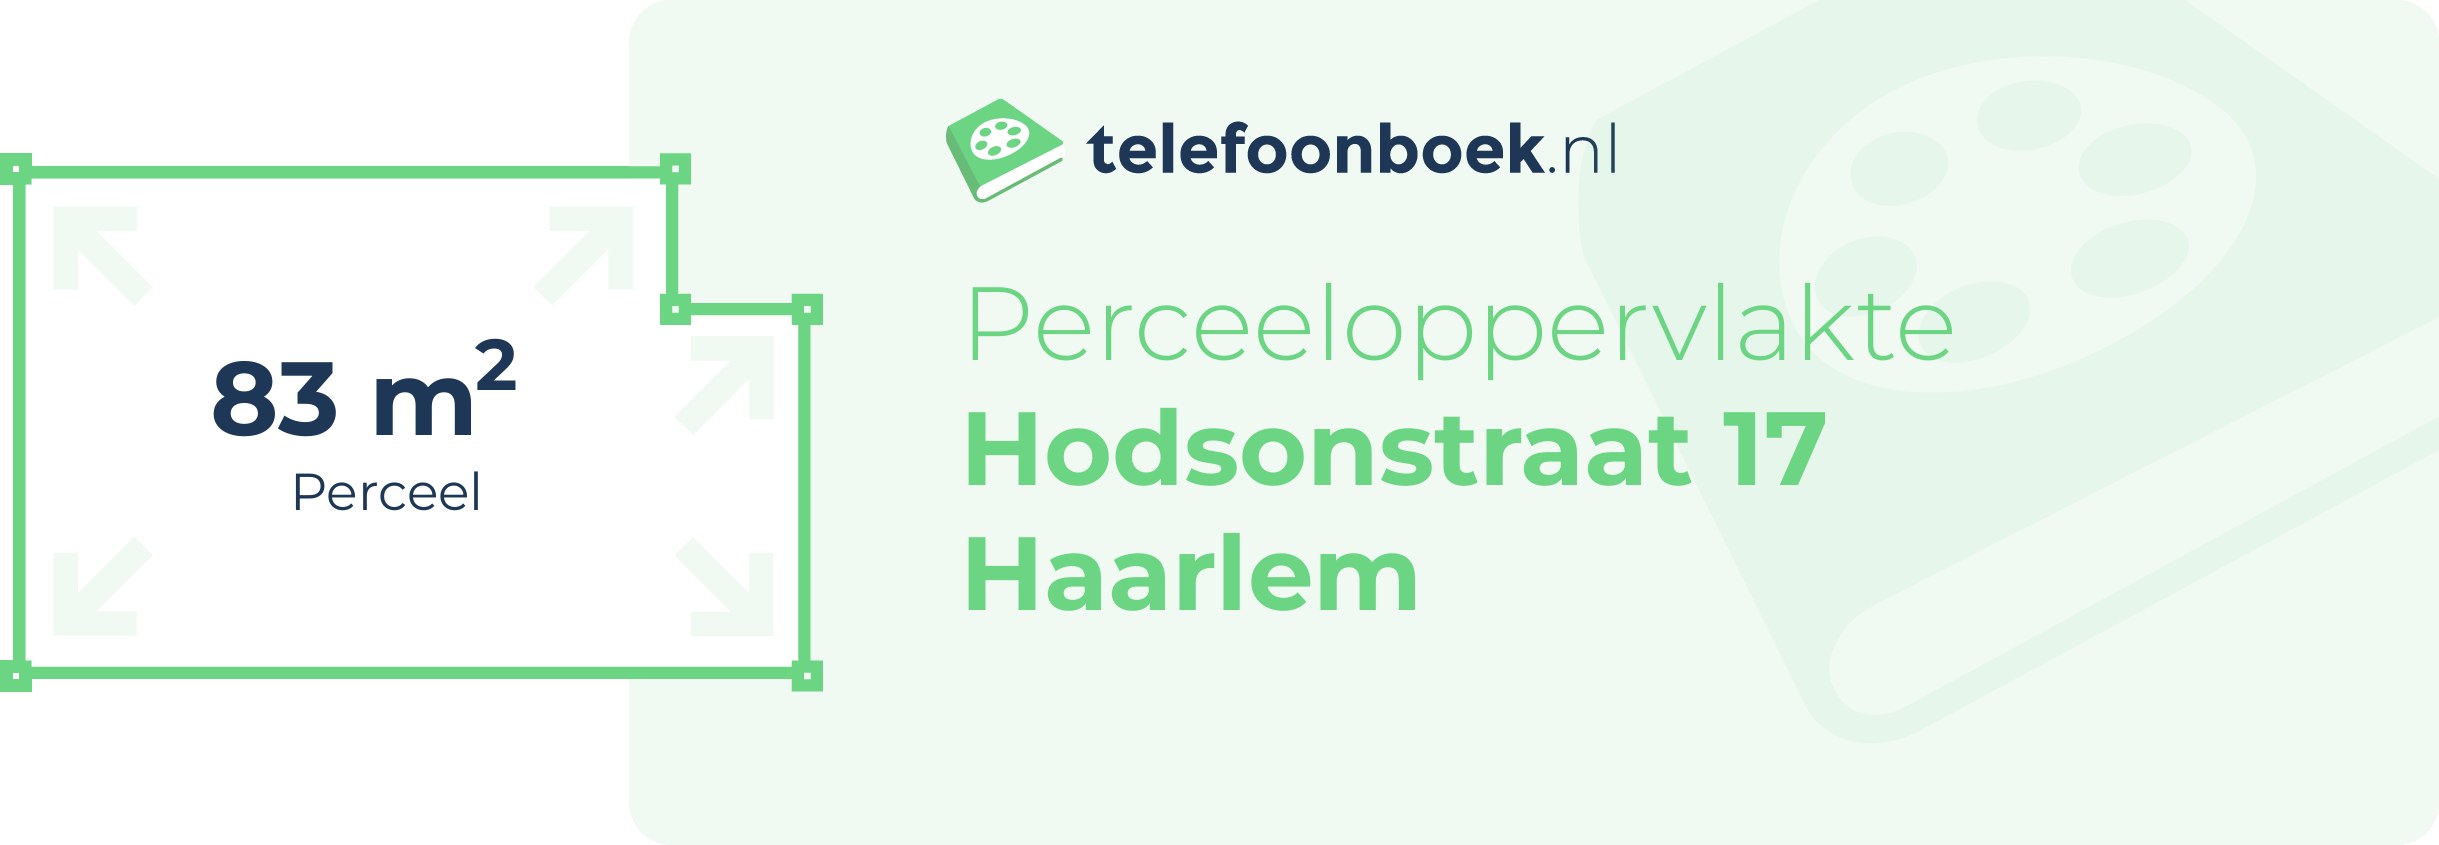 Perceeloppervlakte Hodsonstraat 17 Haarlem